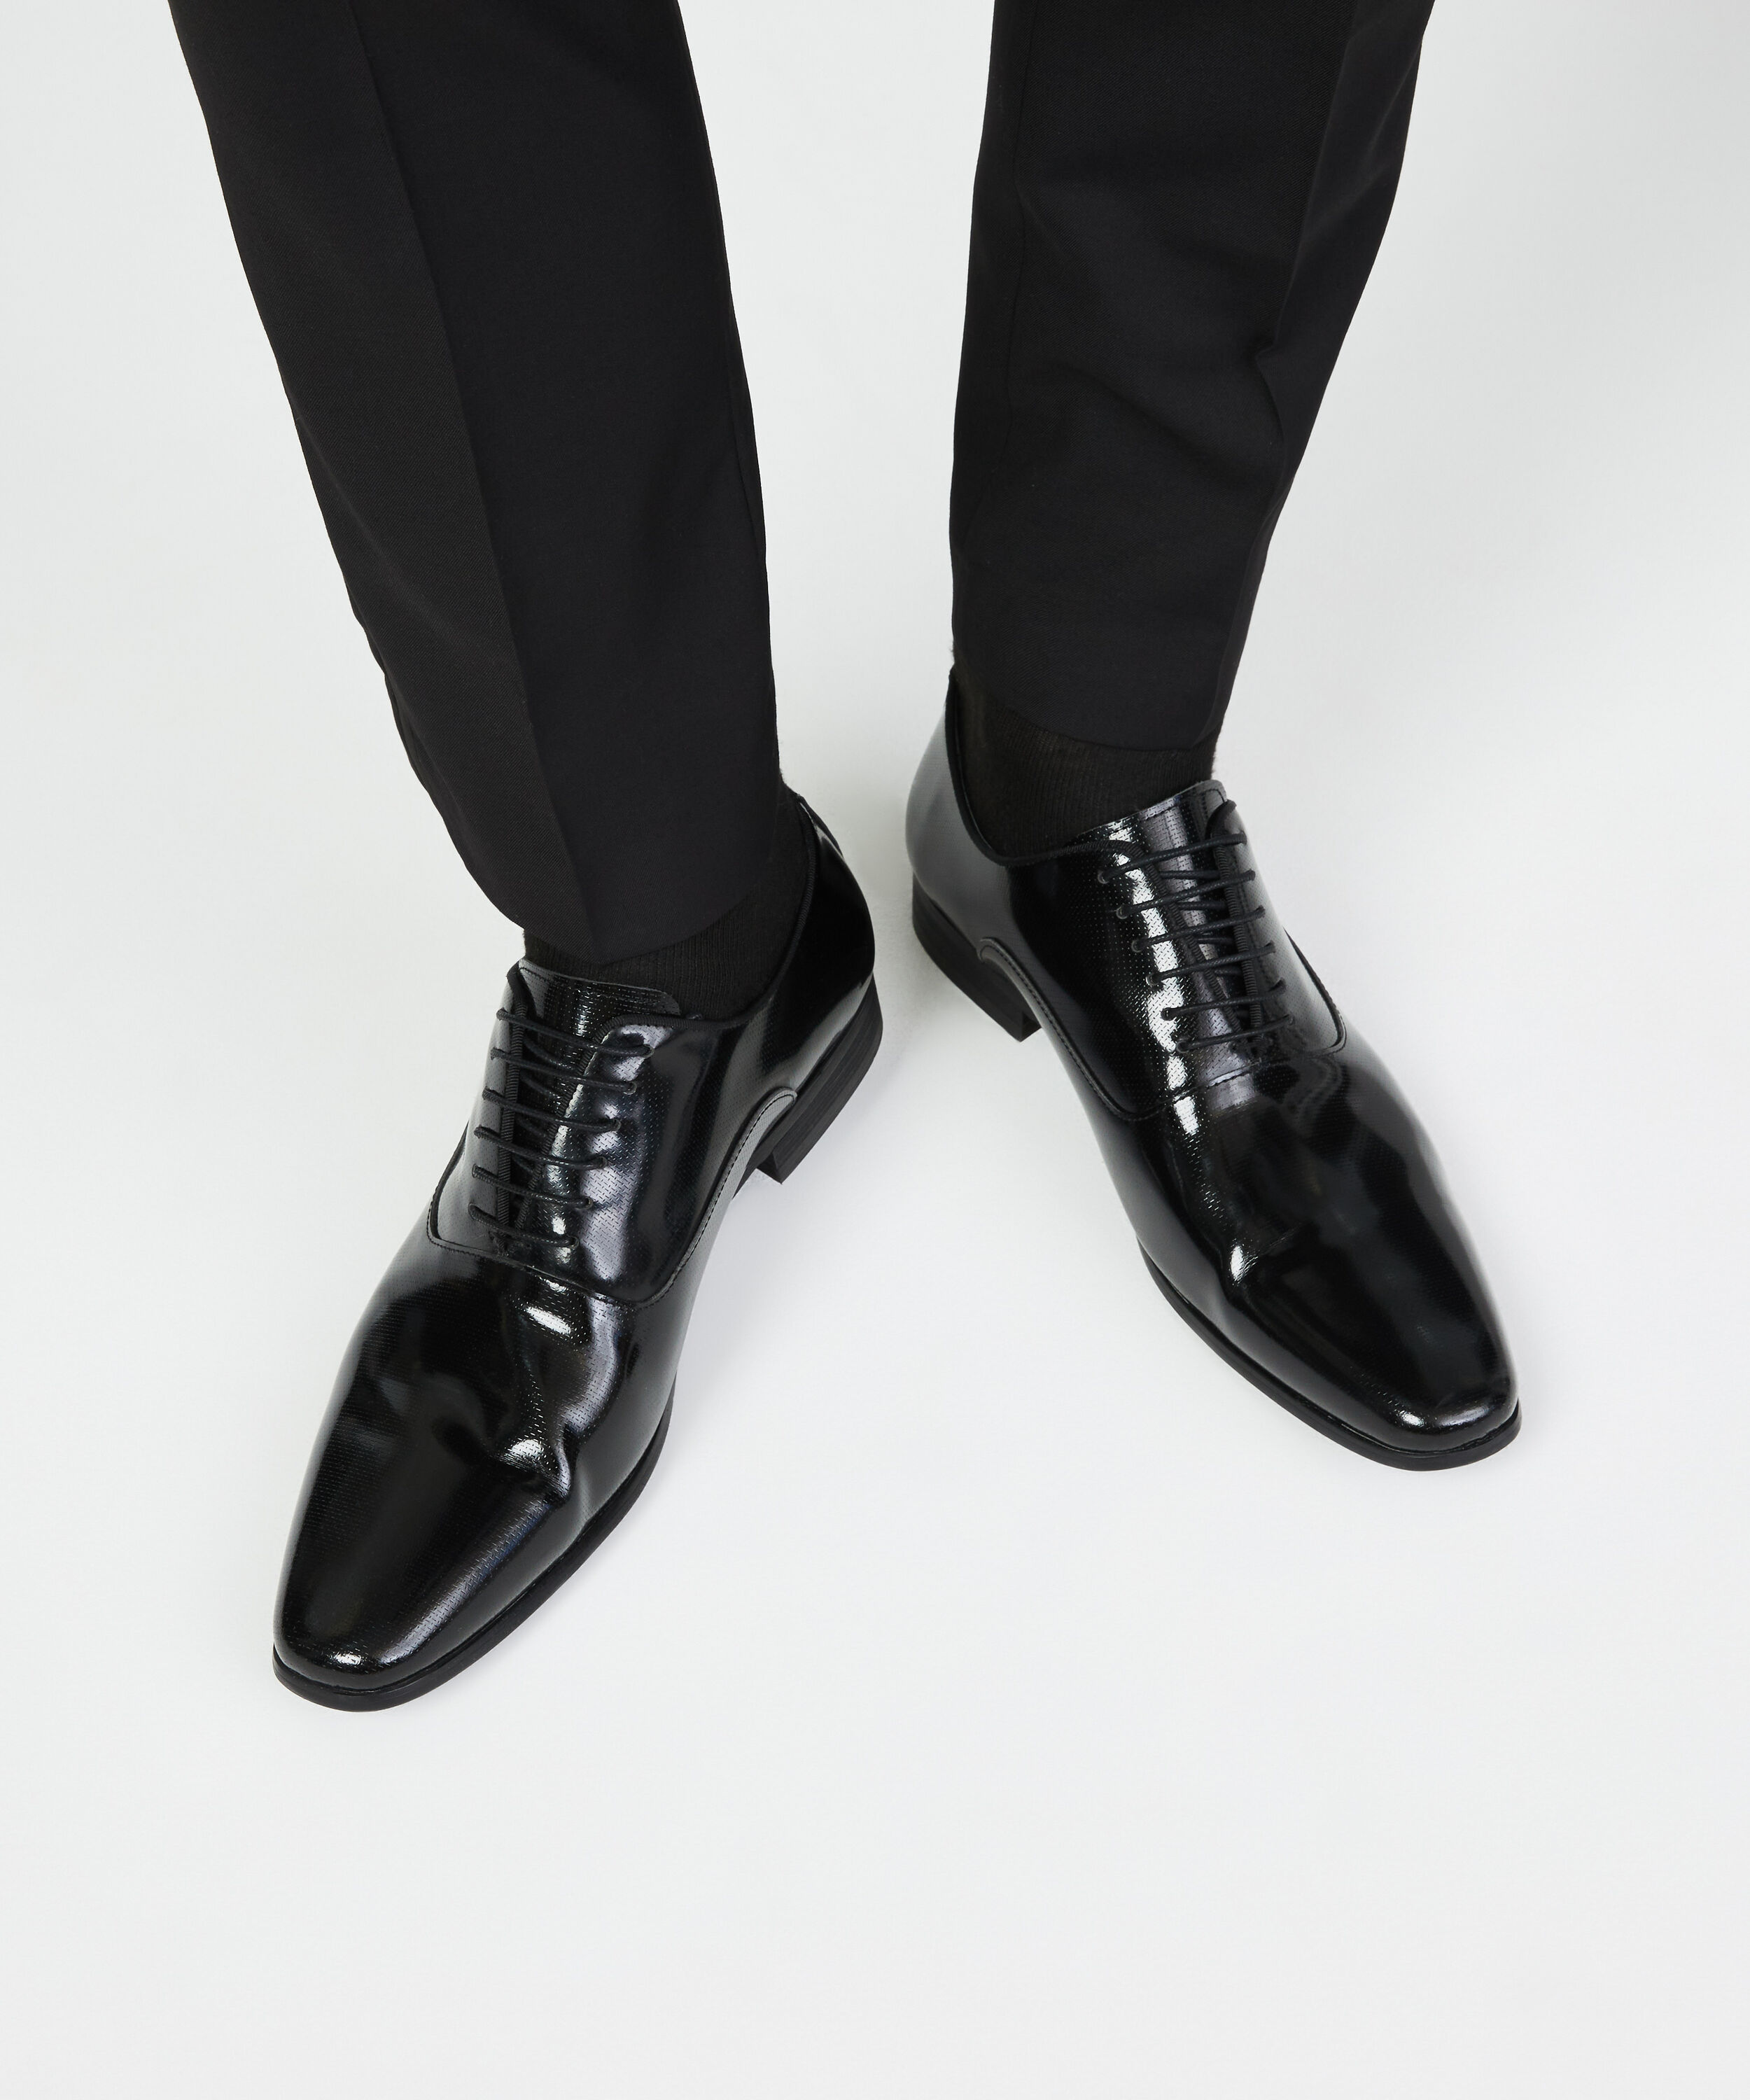 Patent Leather Oxford Dress Shoe - Black | Shoes | Politix